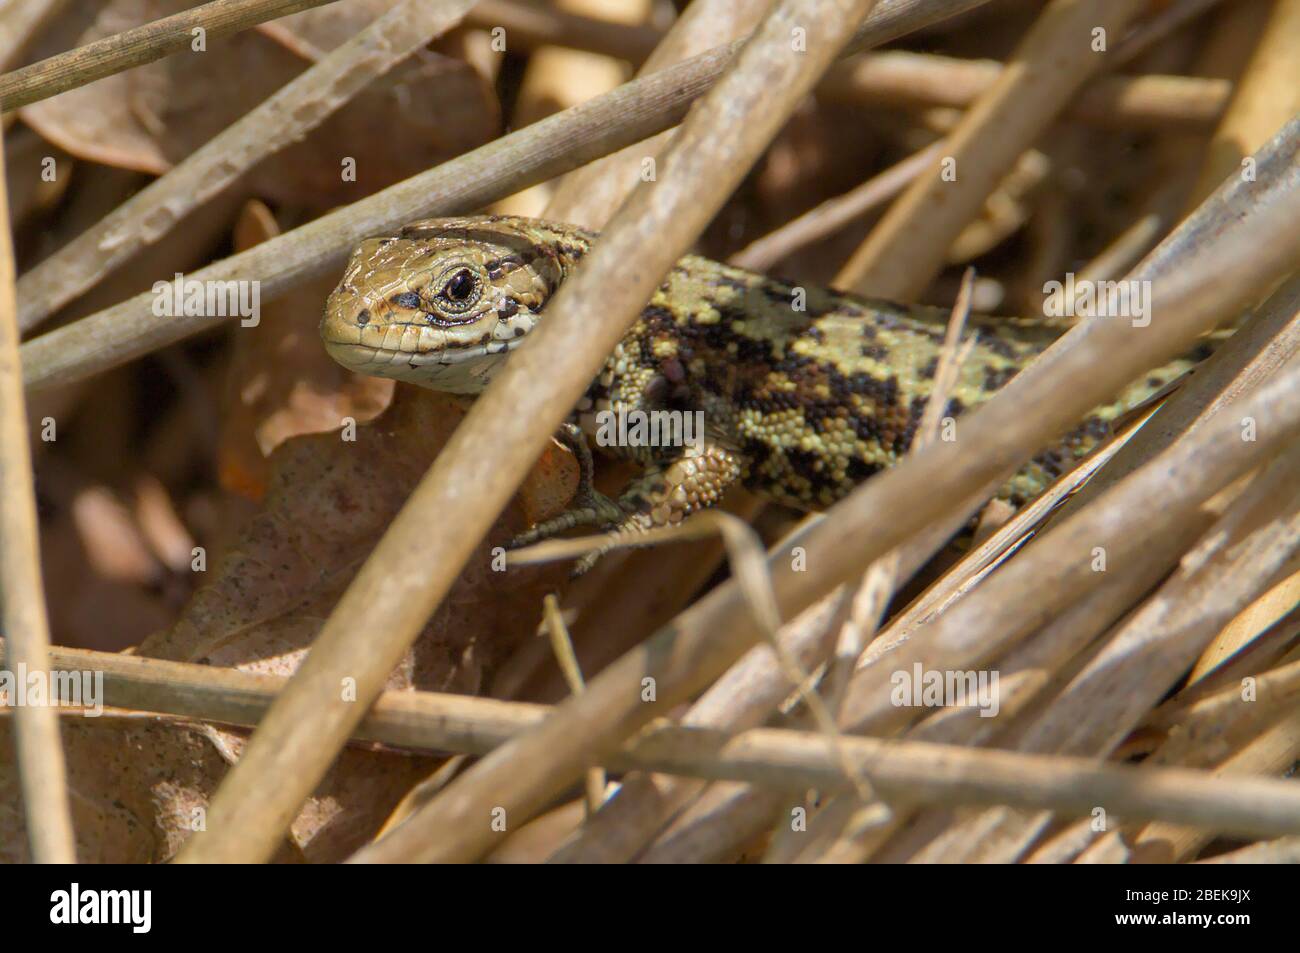 A Common Lizard, Zootoca vivipara Peeking Out From Among A Group Of Reeds. Taken at Hengistbury Head UK Stock Photo